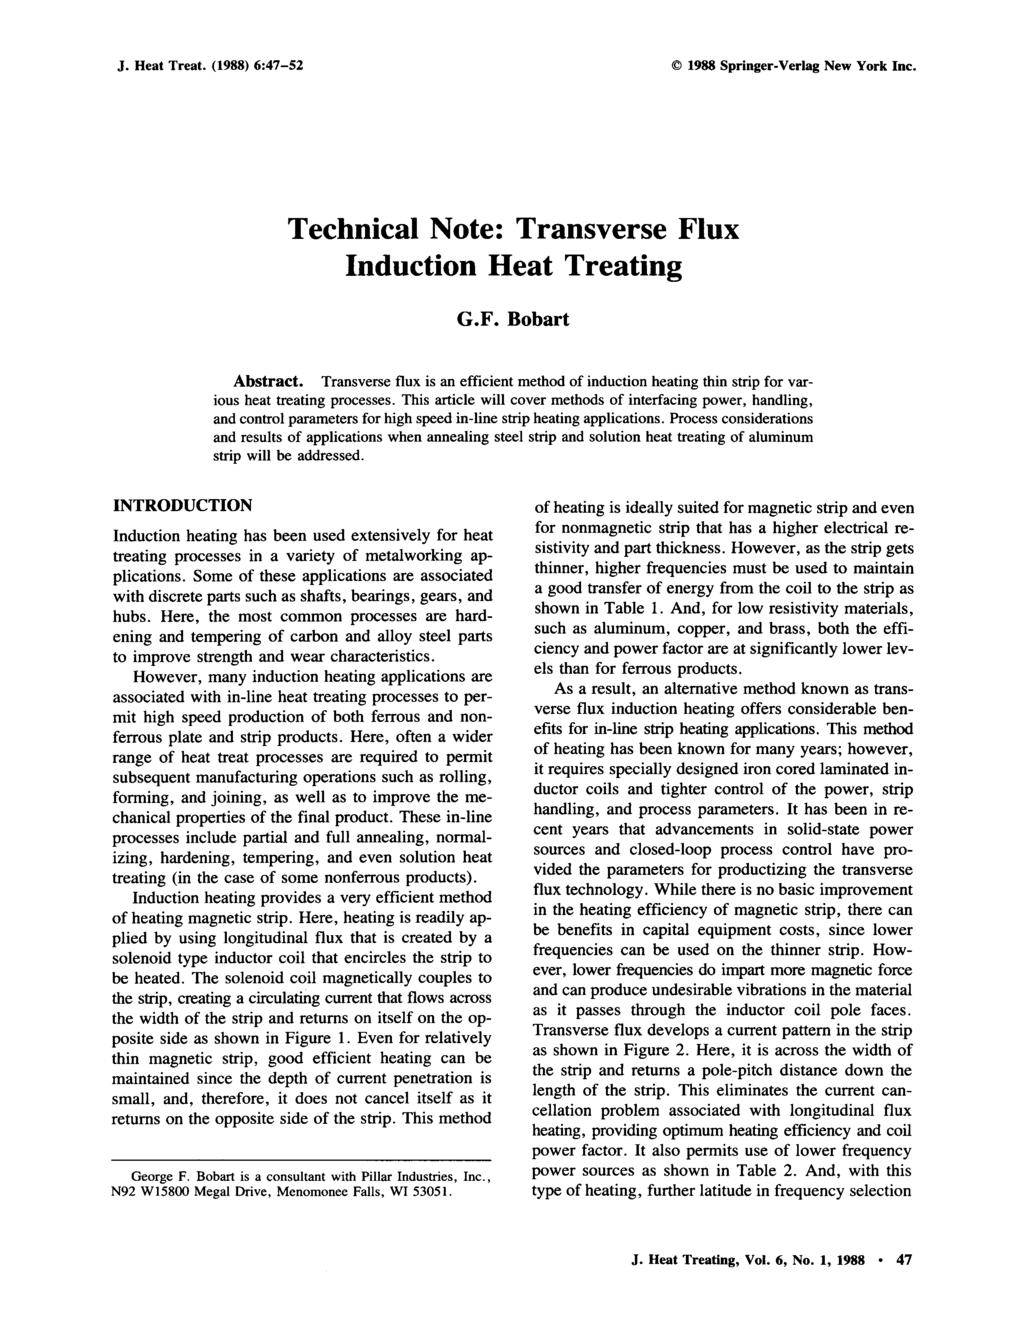 J. Heat Treat. (1988) 6:47-52 9 1988 Springer-Verlag New York Inc. Technical Note: Transverse Flux Induction Heat Treating G.F. Bobart Abstract.